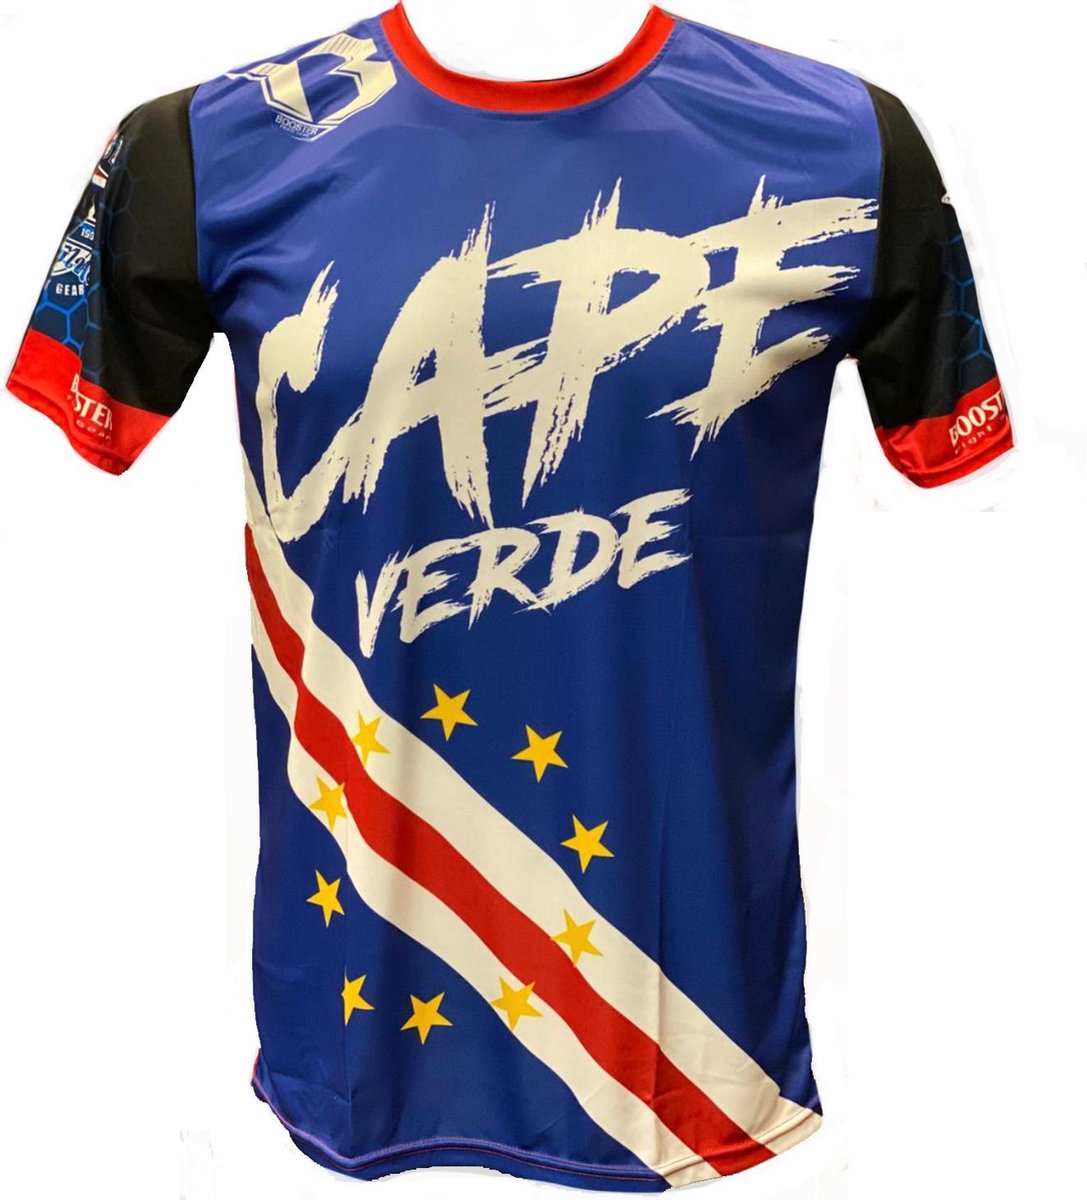 Kaapverdië - Cabo Verde Shirt by Booster